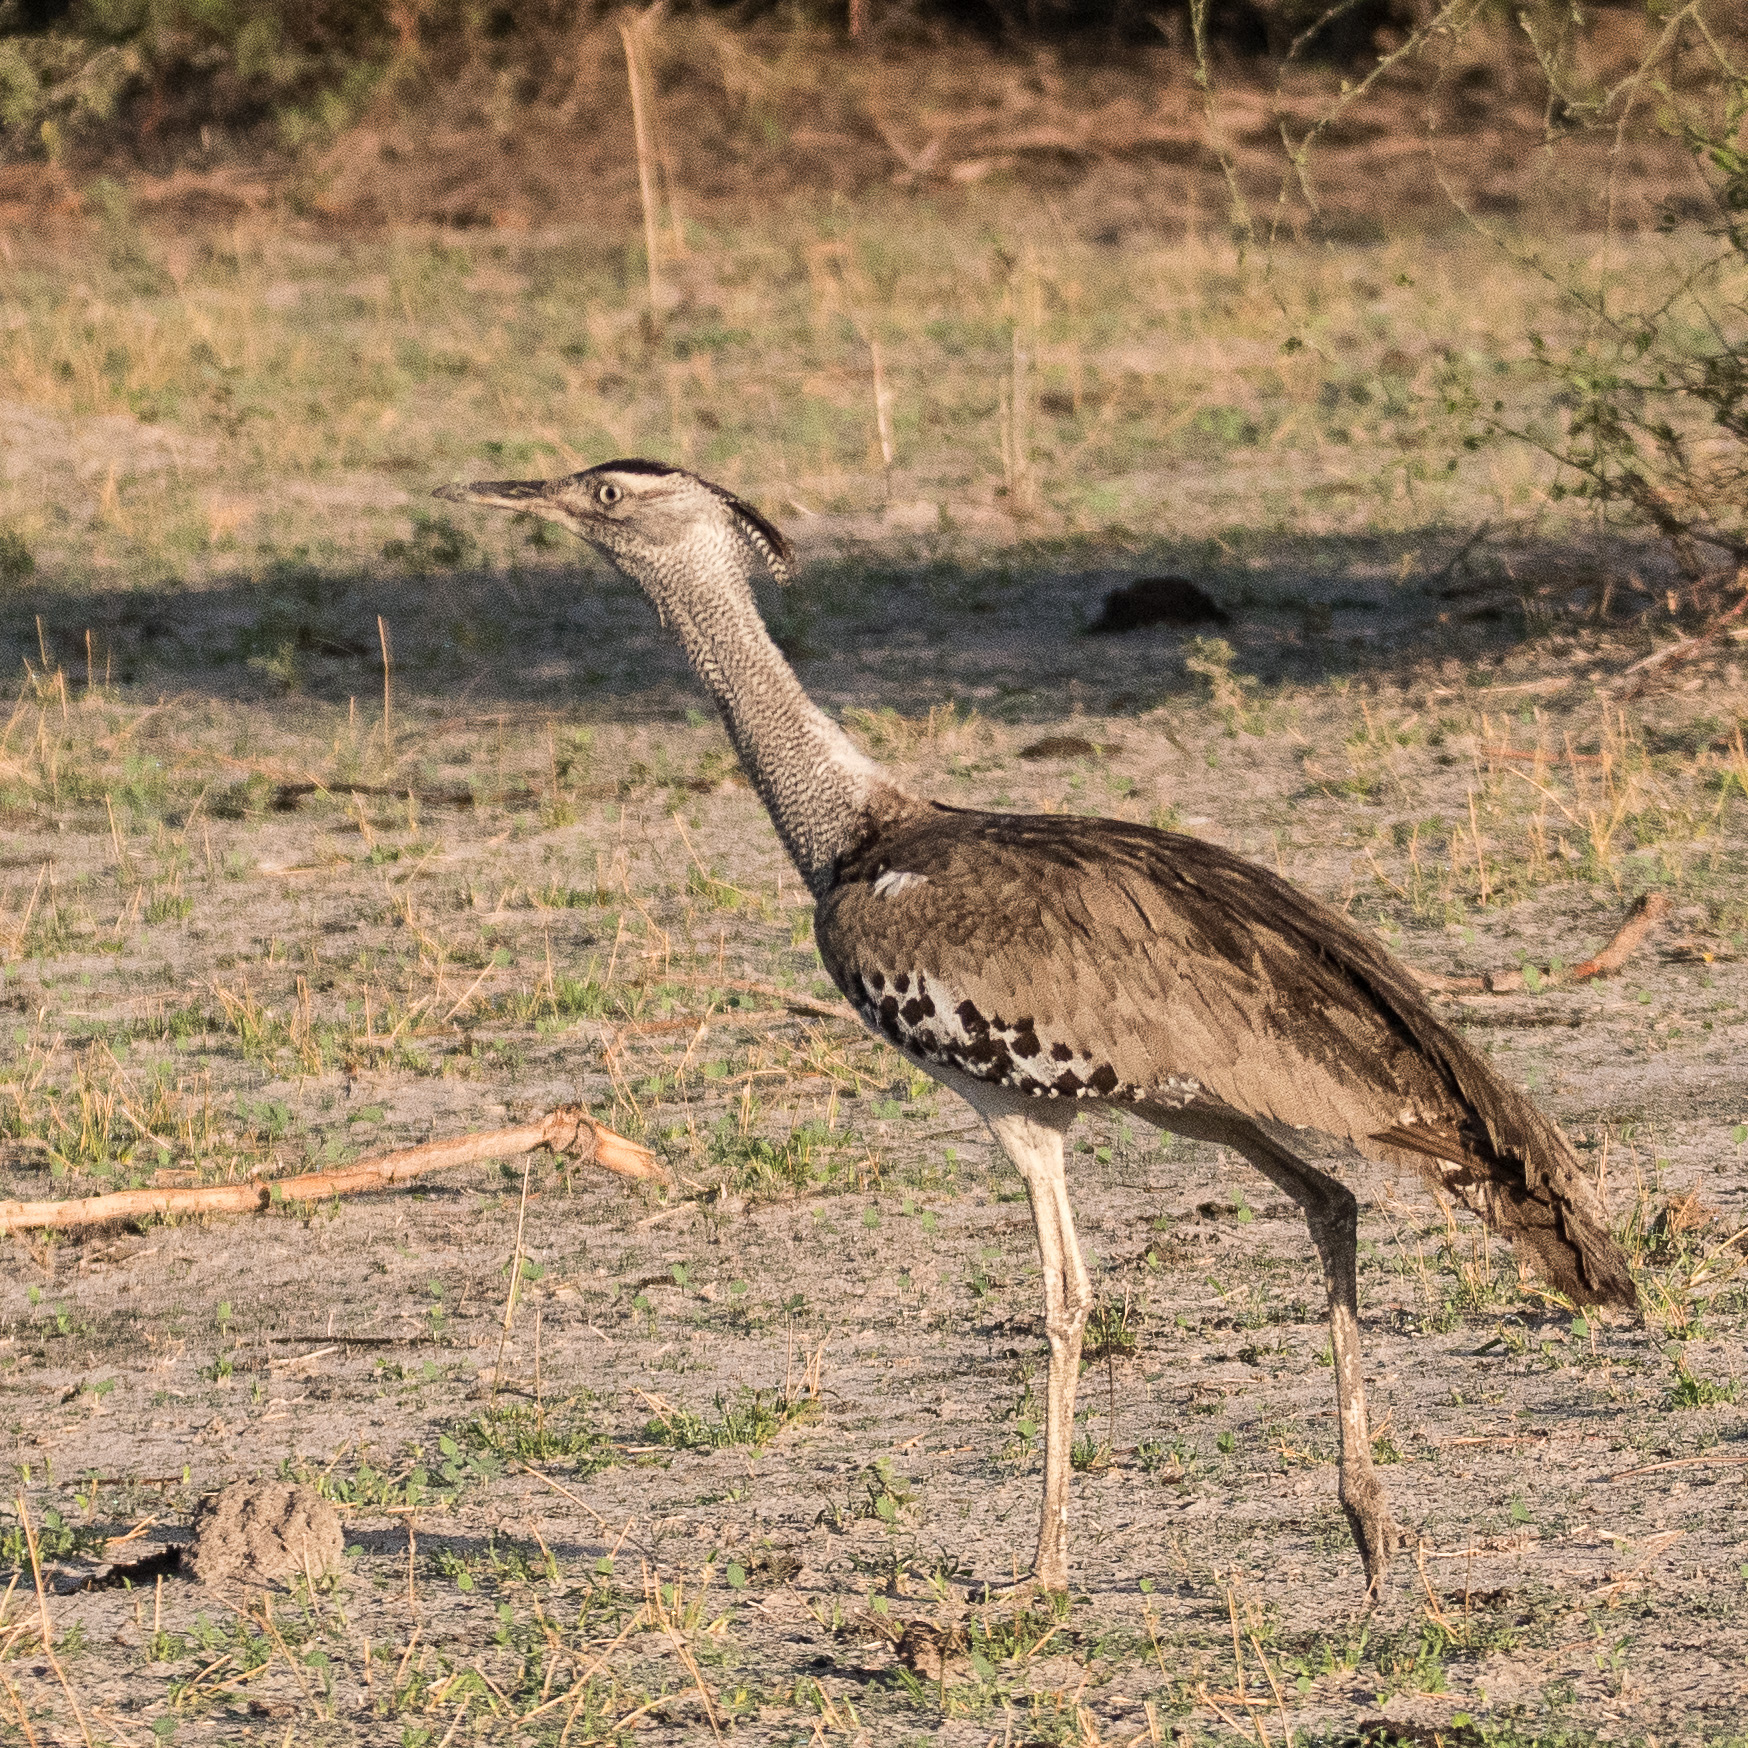 Outarde Kori (Kori bustard, Ardeotis Kori), femelle adulte, Chobe National Park, Botswana.